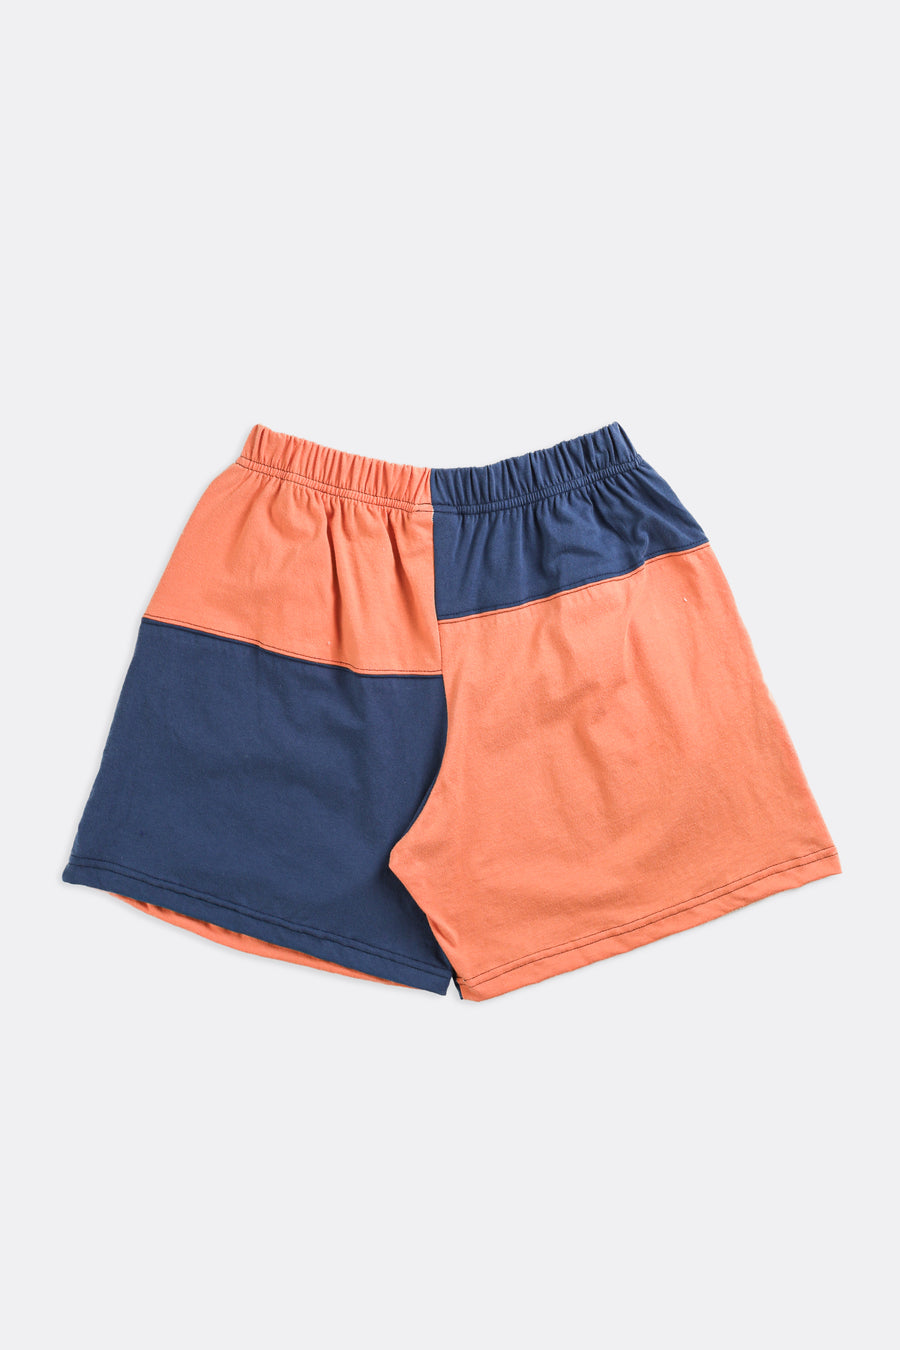 Unisex Rework Patchwork Tee Shorts - Women's S, Men's XS